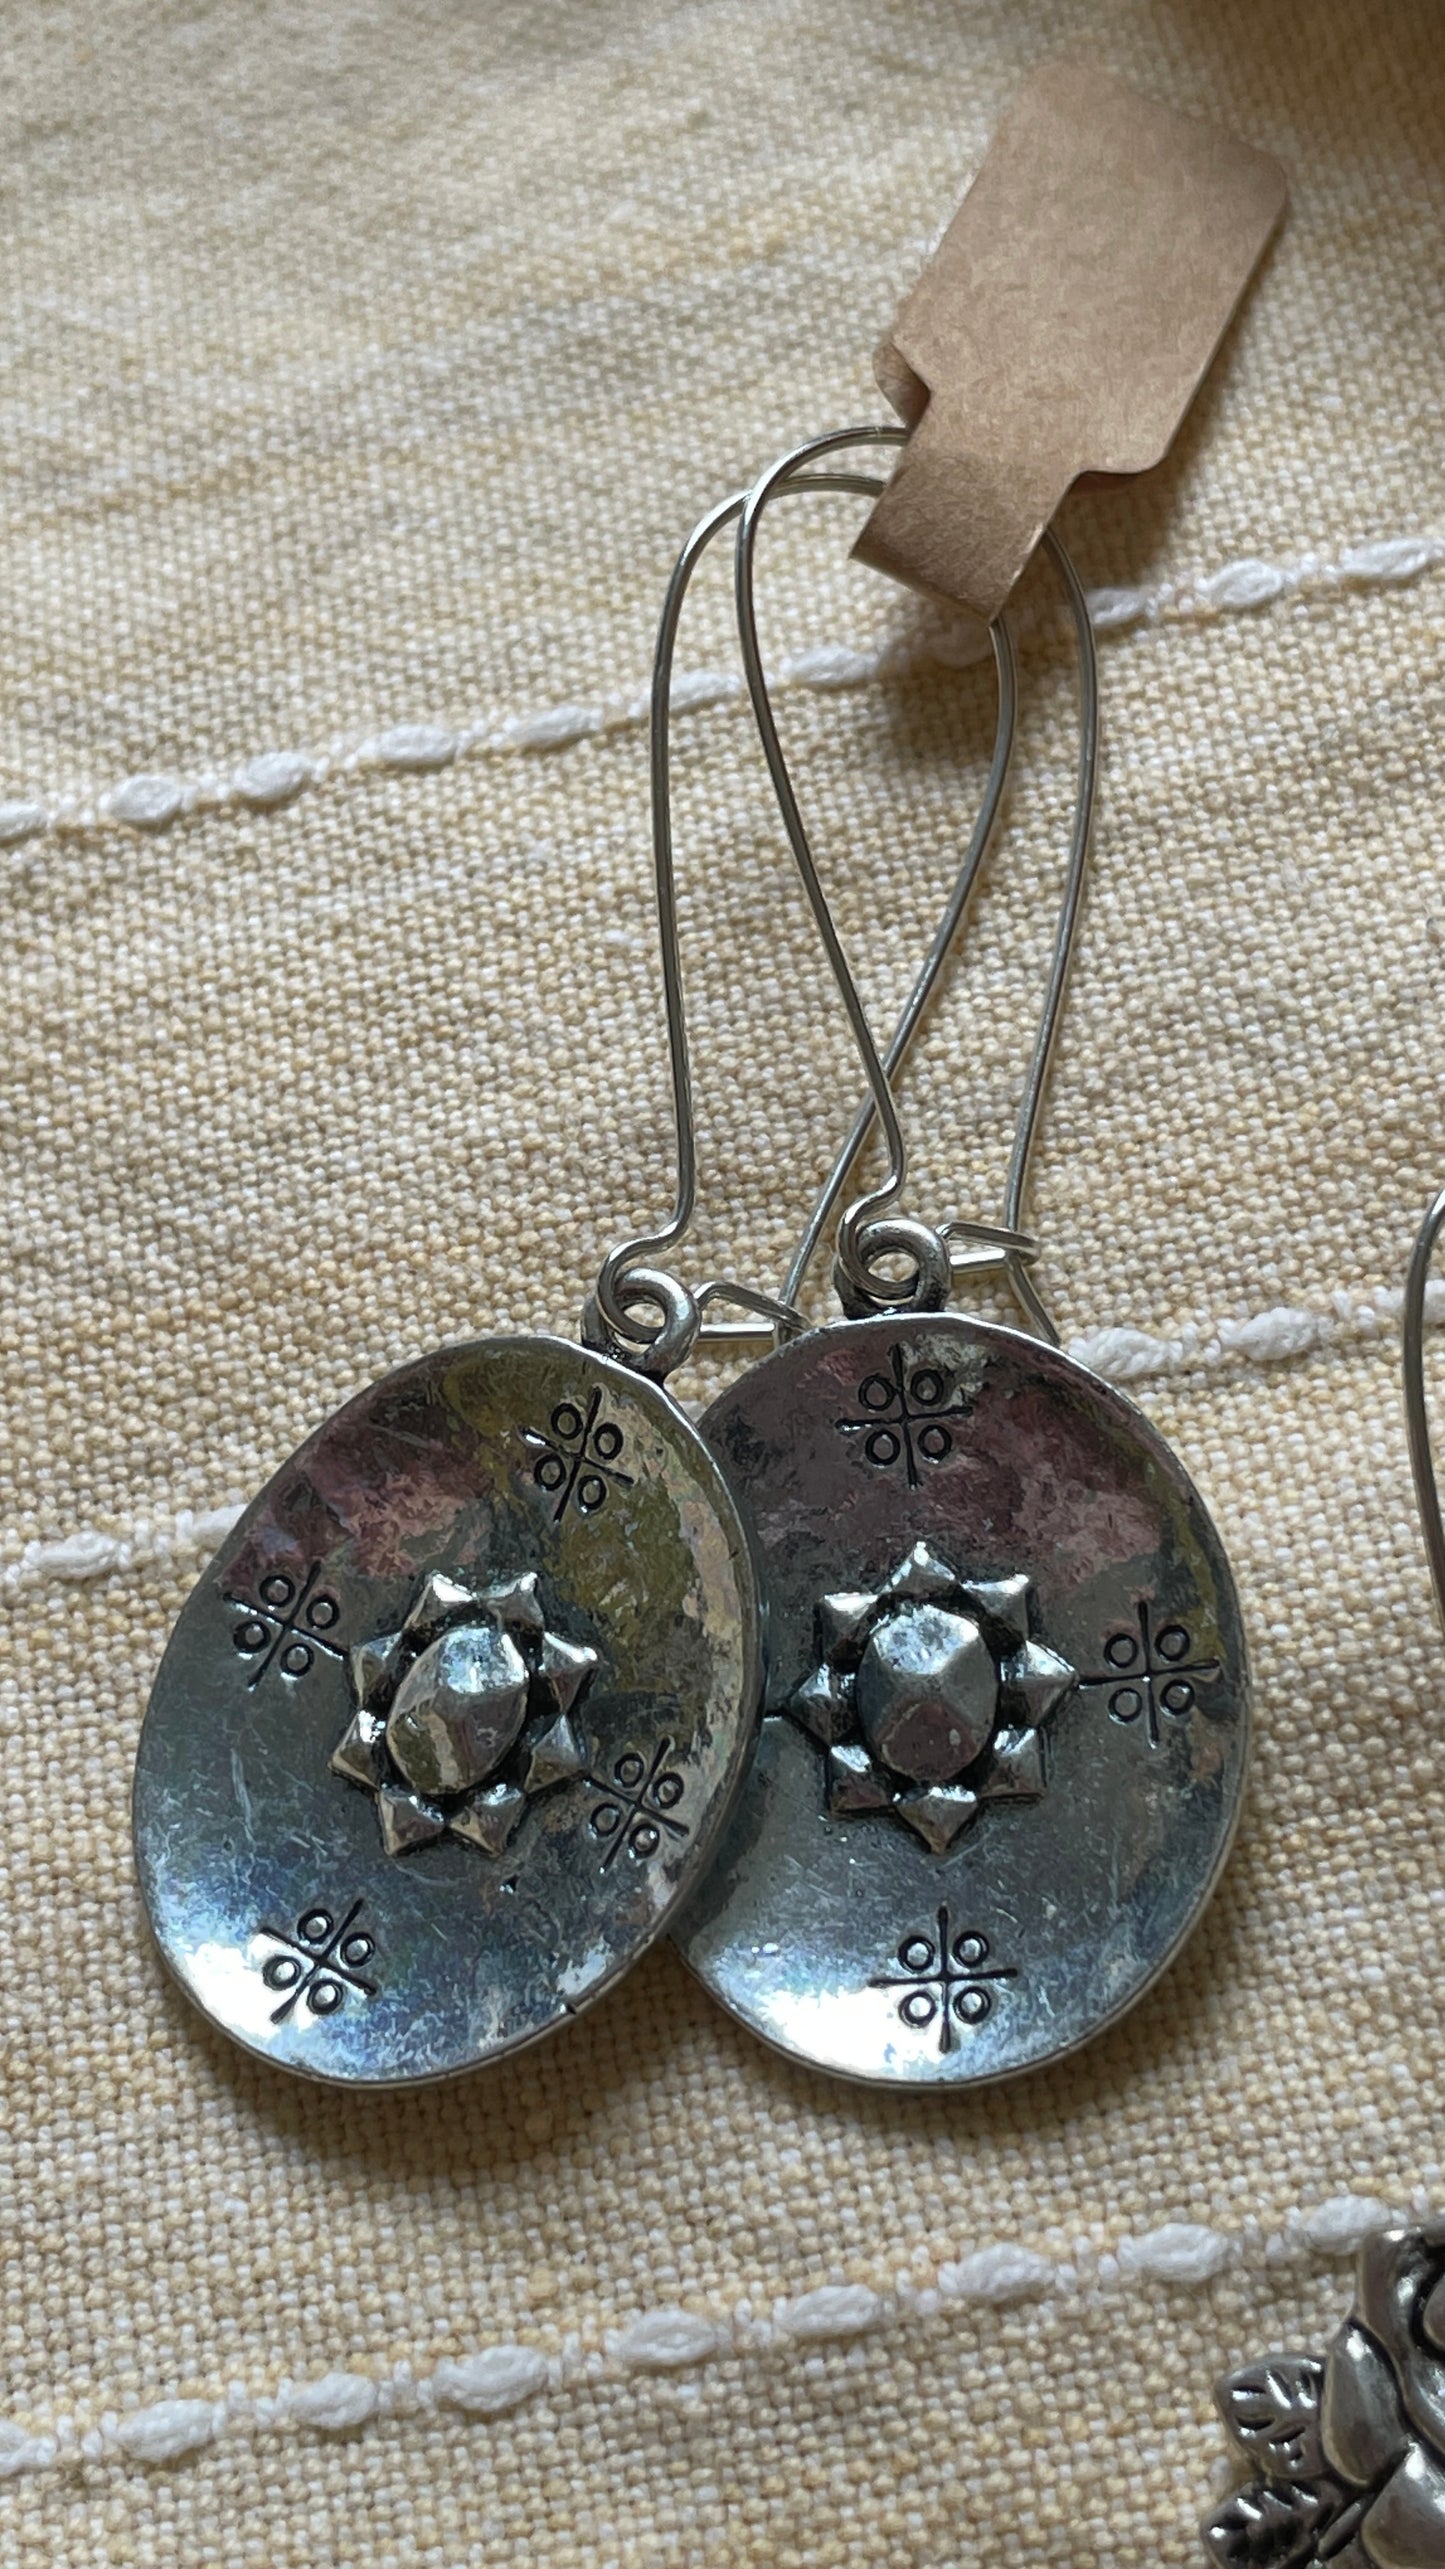 Vintage upcycled earrings